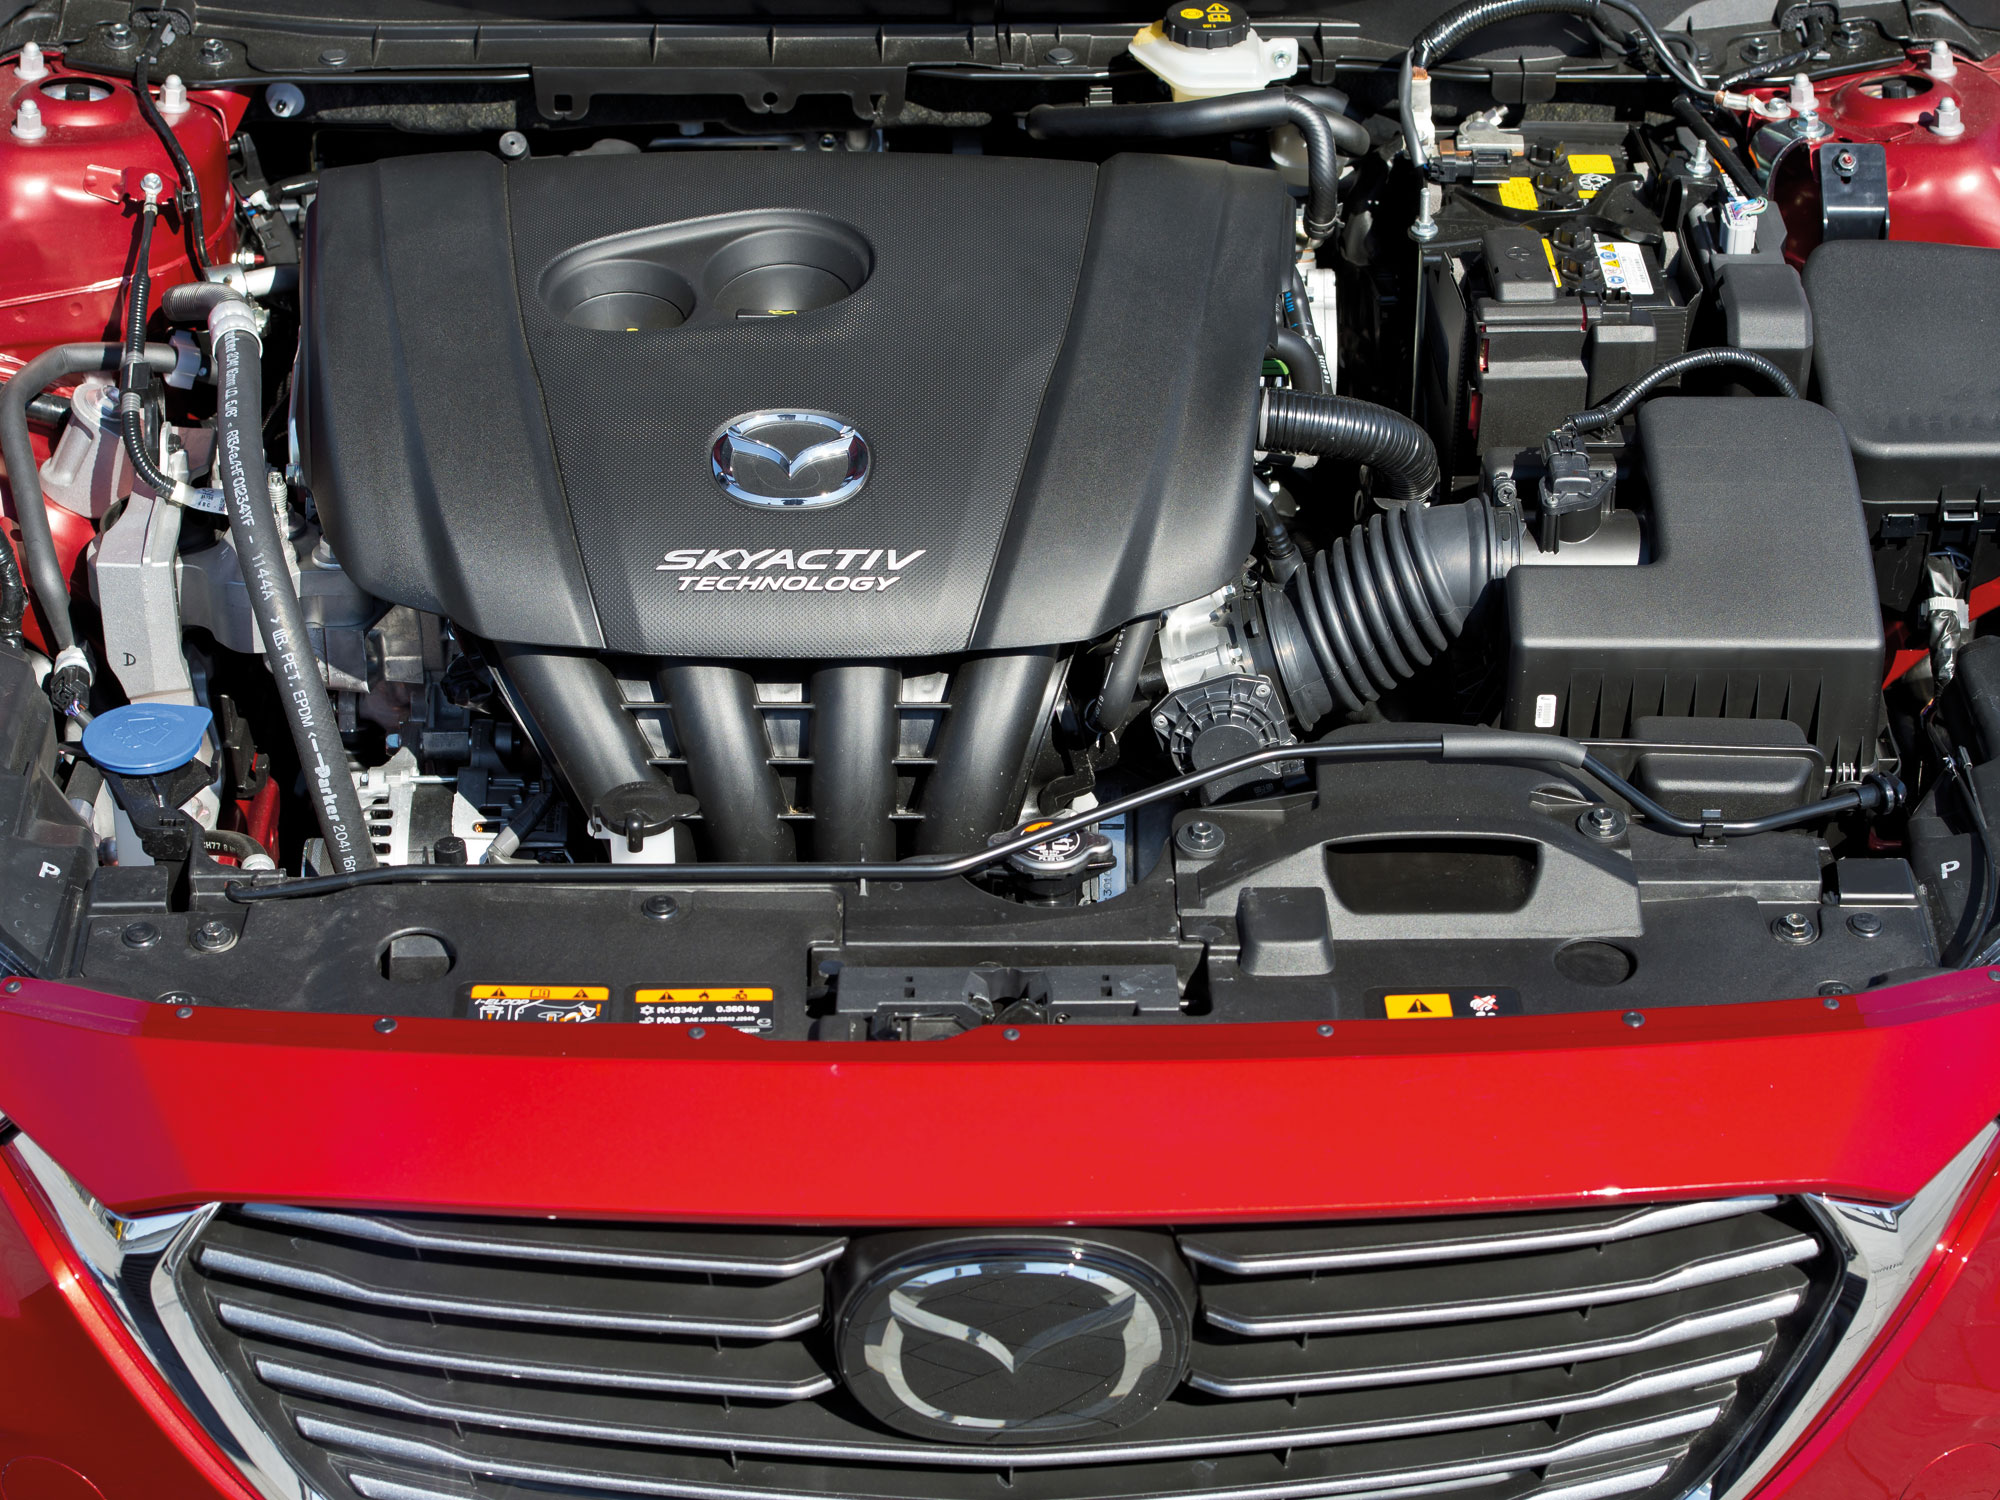 Мазда сх5 моторы. Mazda CX 5 двигатель. Мазда СХ-5 под капотом. Mazda CX 5 под капотом. Мазда CX 5 2.0 двигатель.